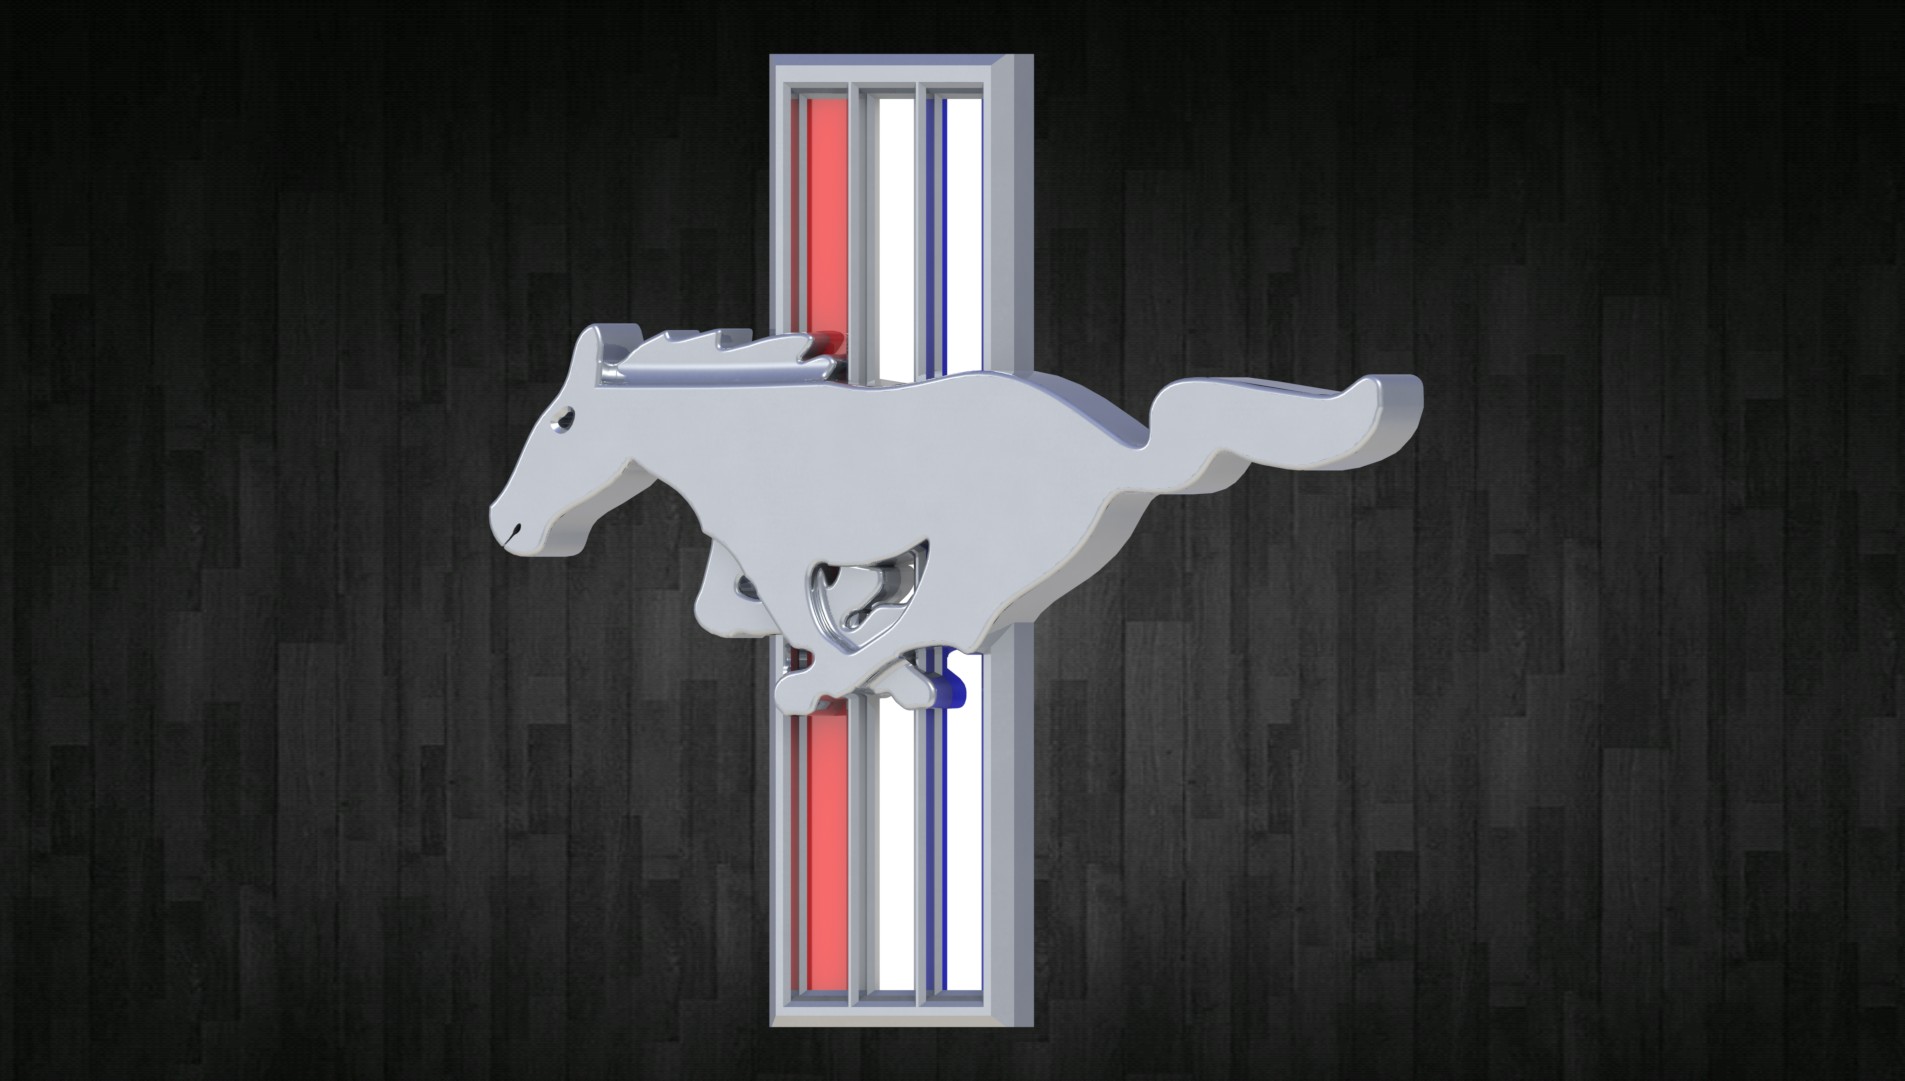 White Ford Mustang photo – Free Logo Image on Unsplash